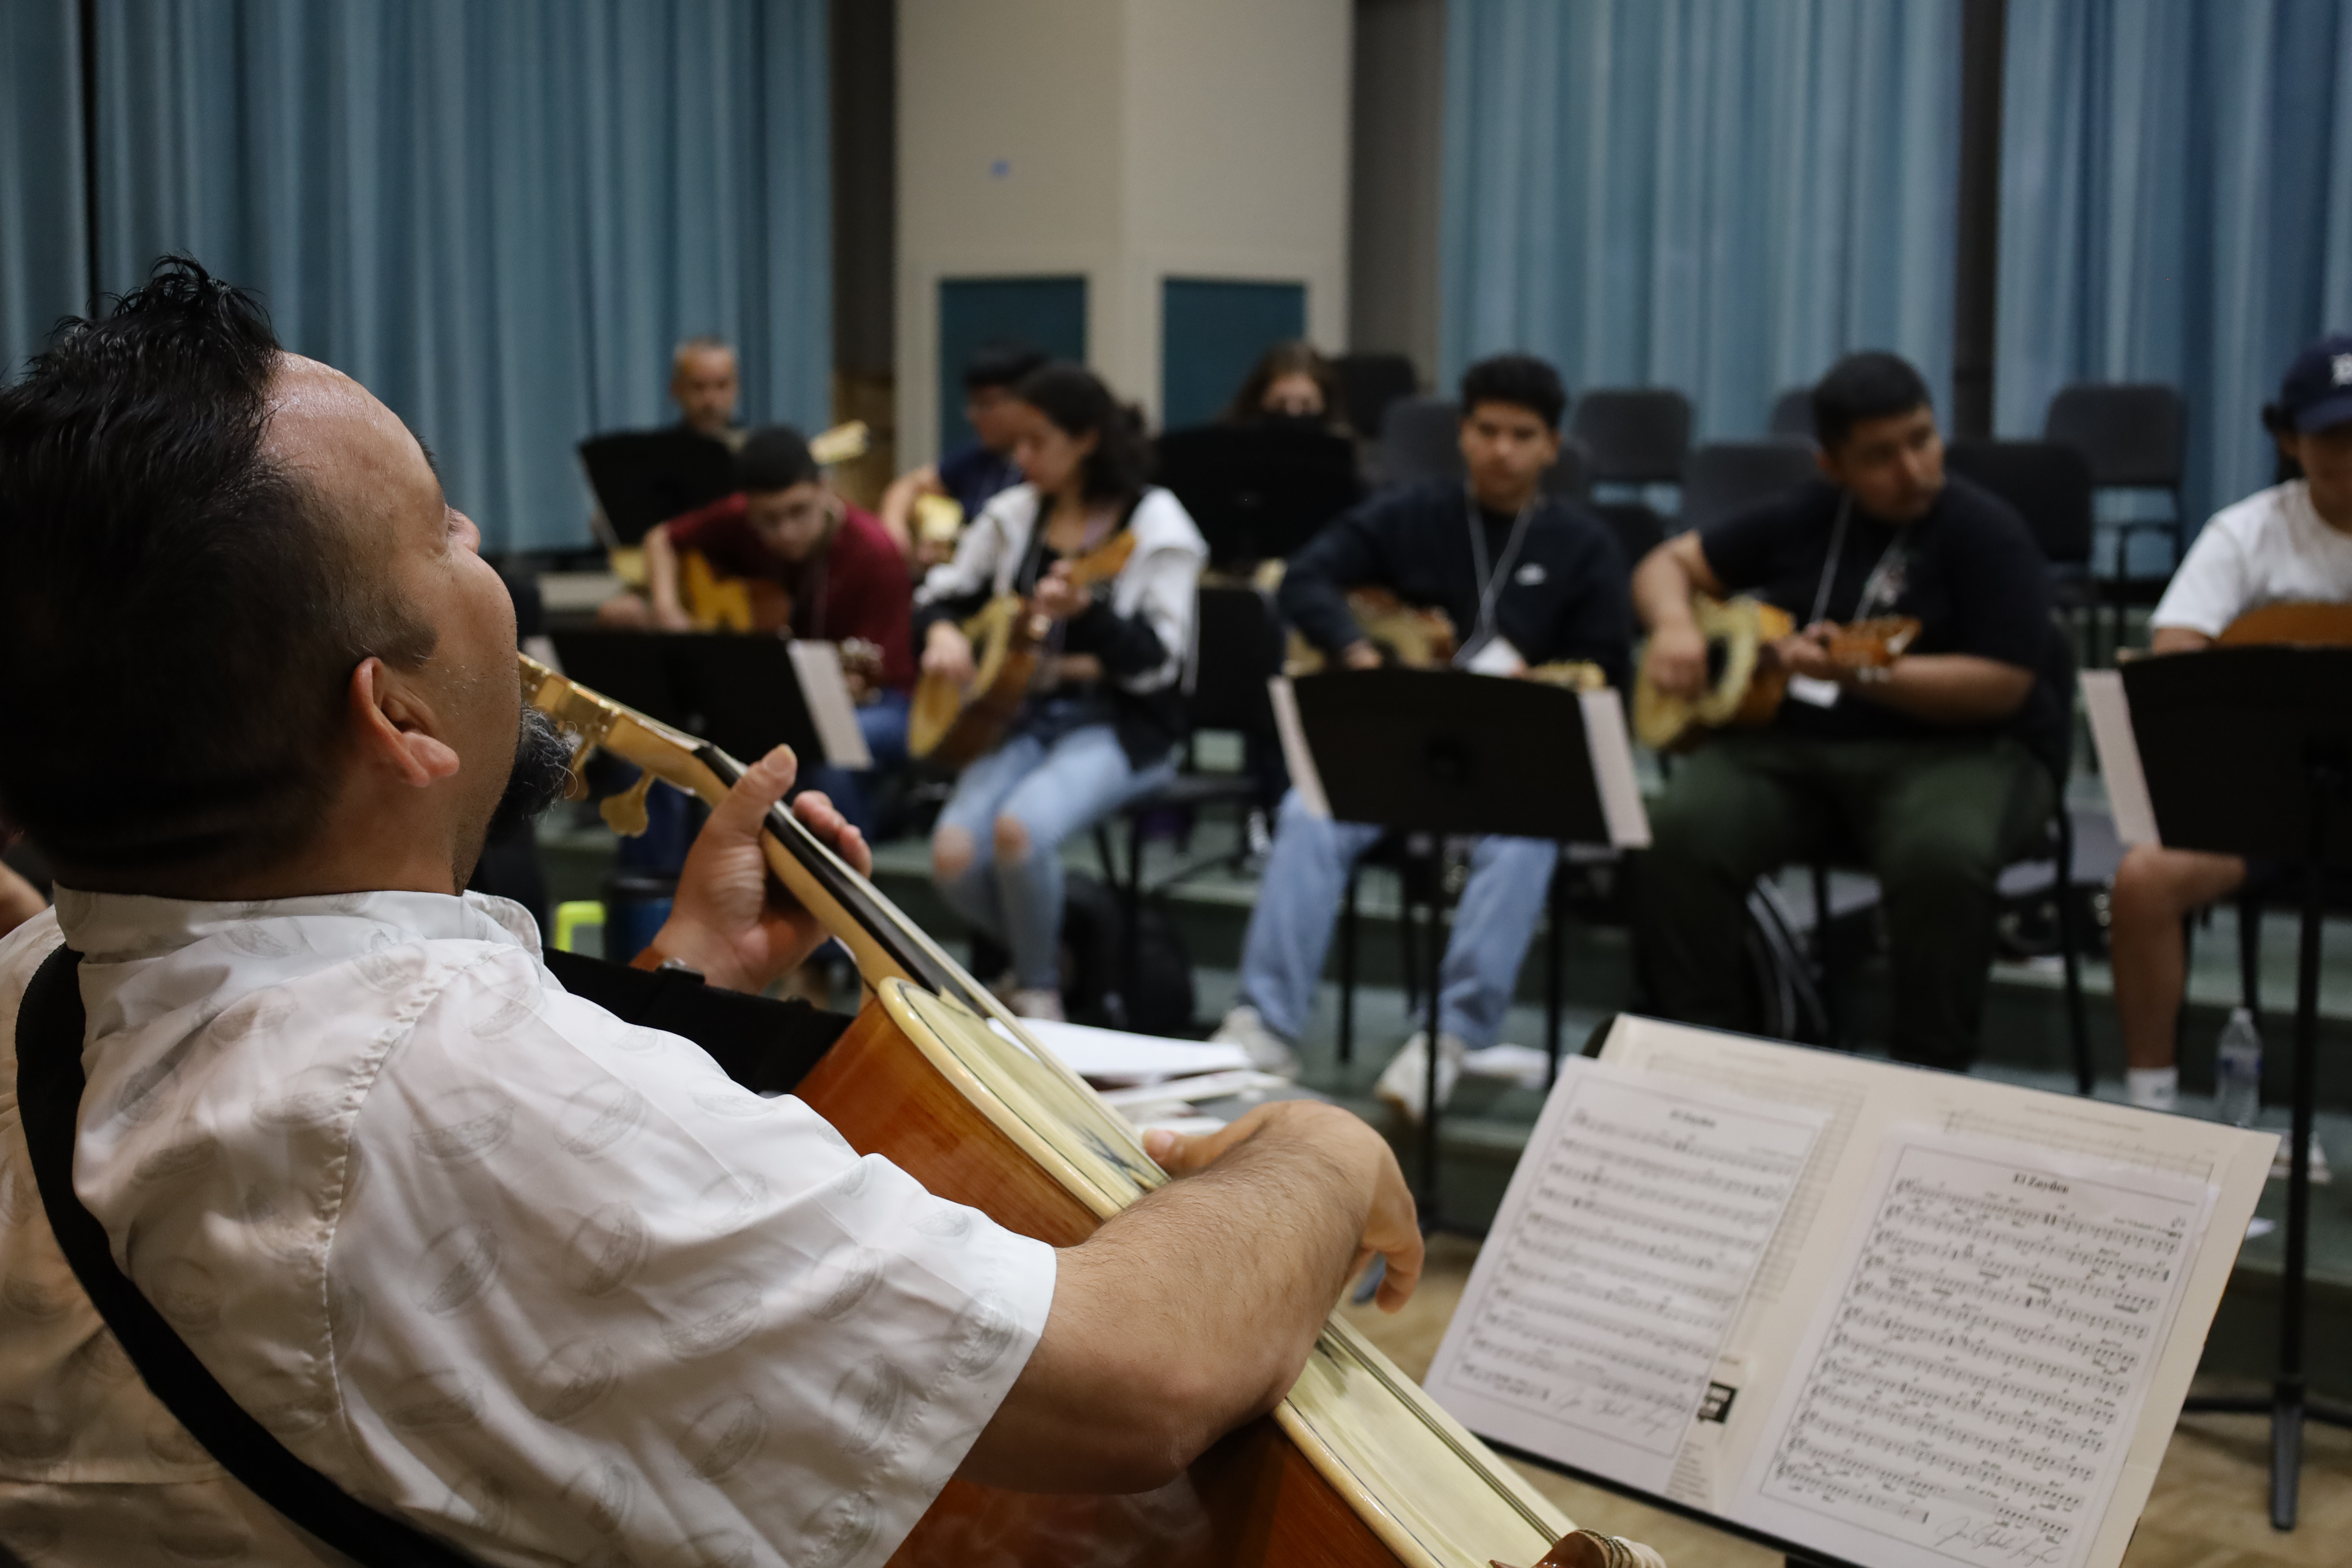 Jose Longoria leading an armonia rehearsal